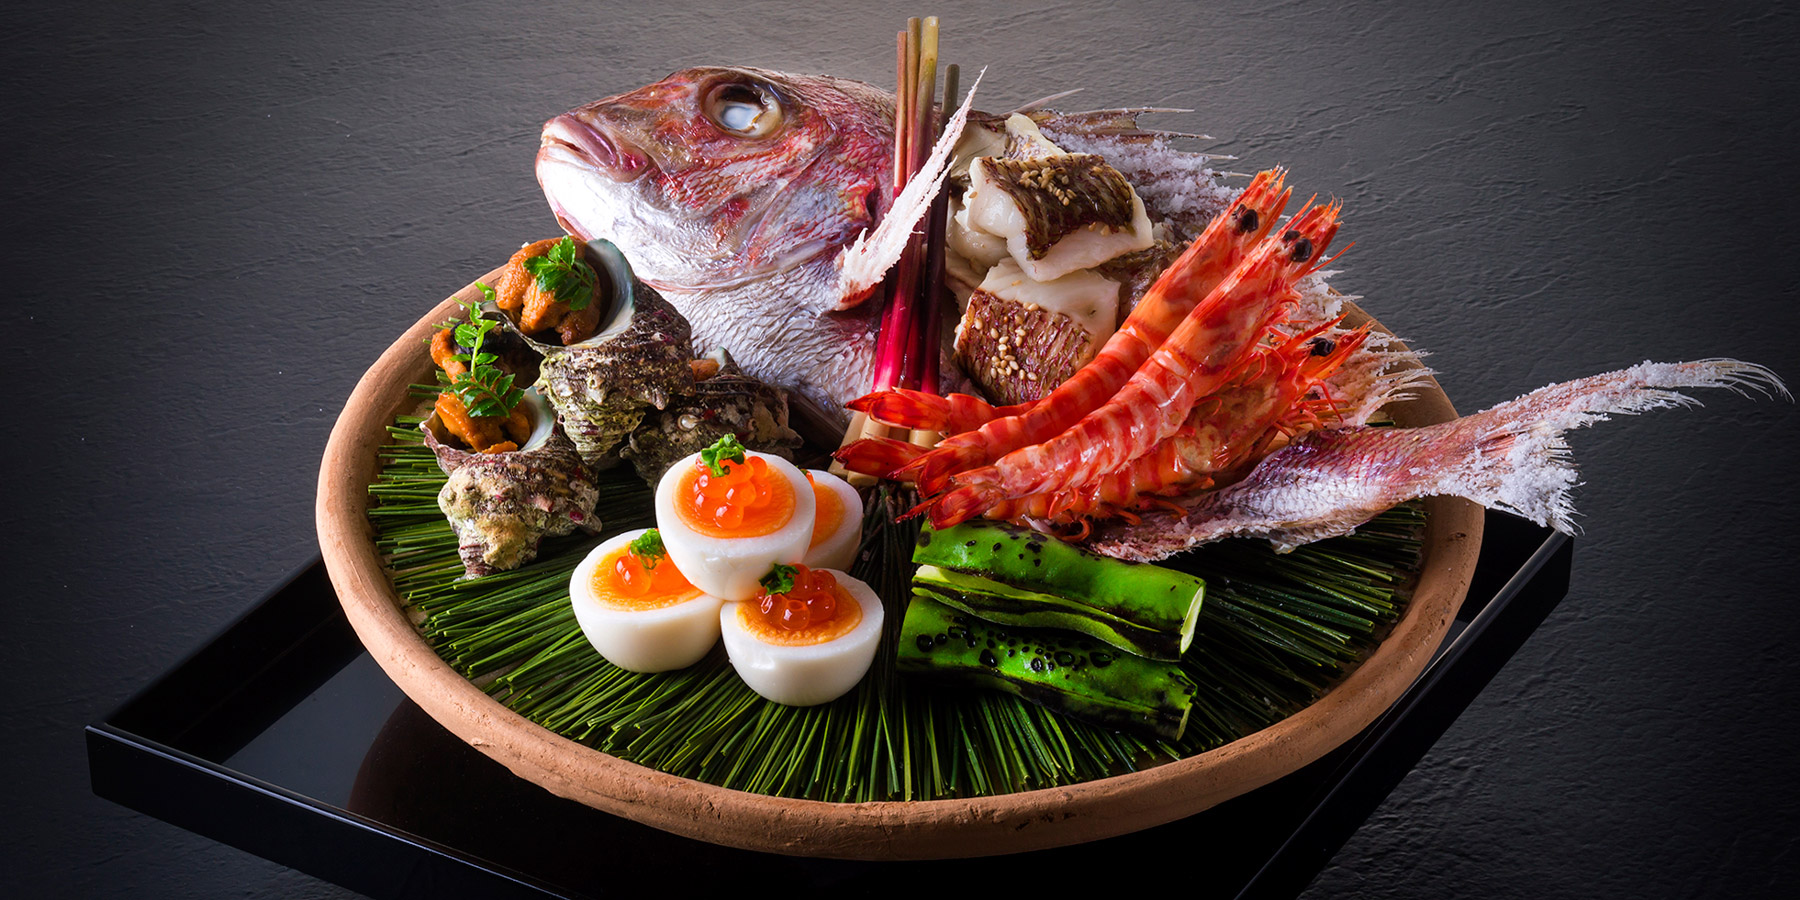 SPECIALTIES ｰ Our new menu, ”Horakuyaki”, specialty of Ehime prefecture